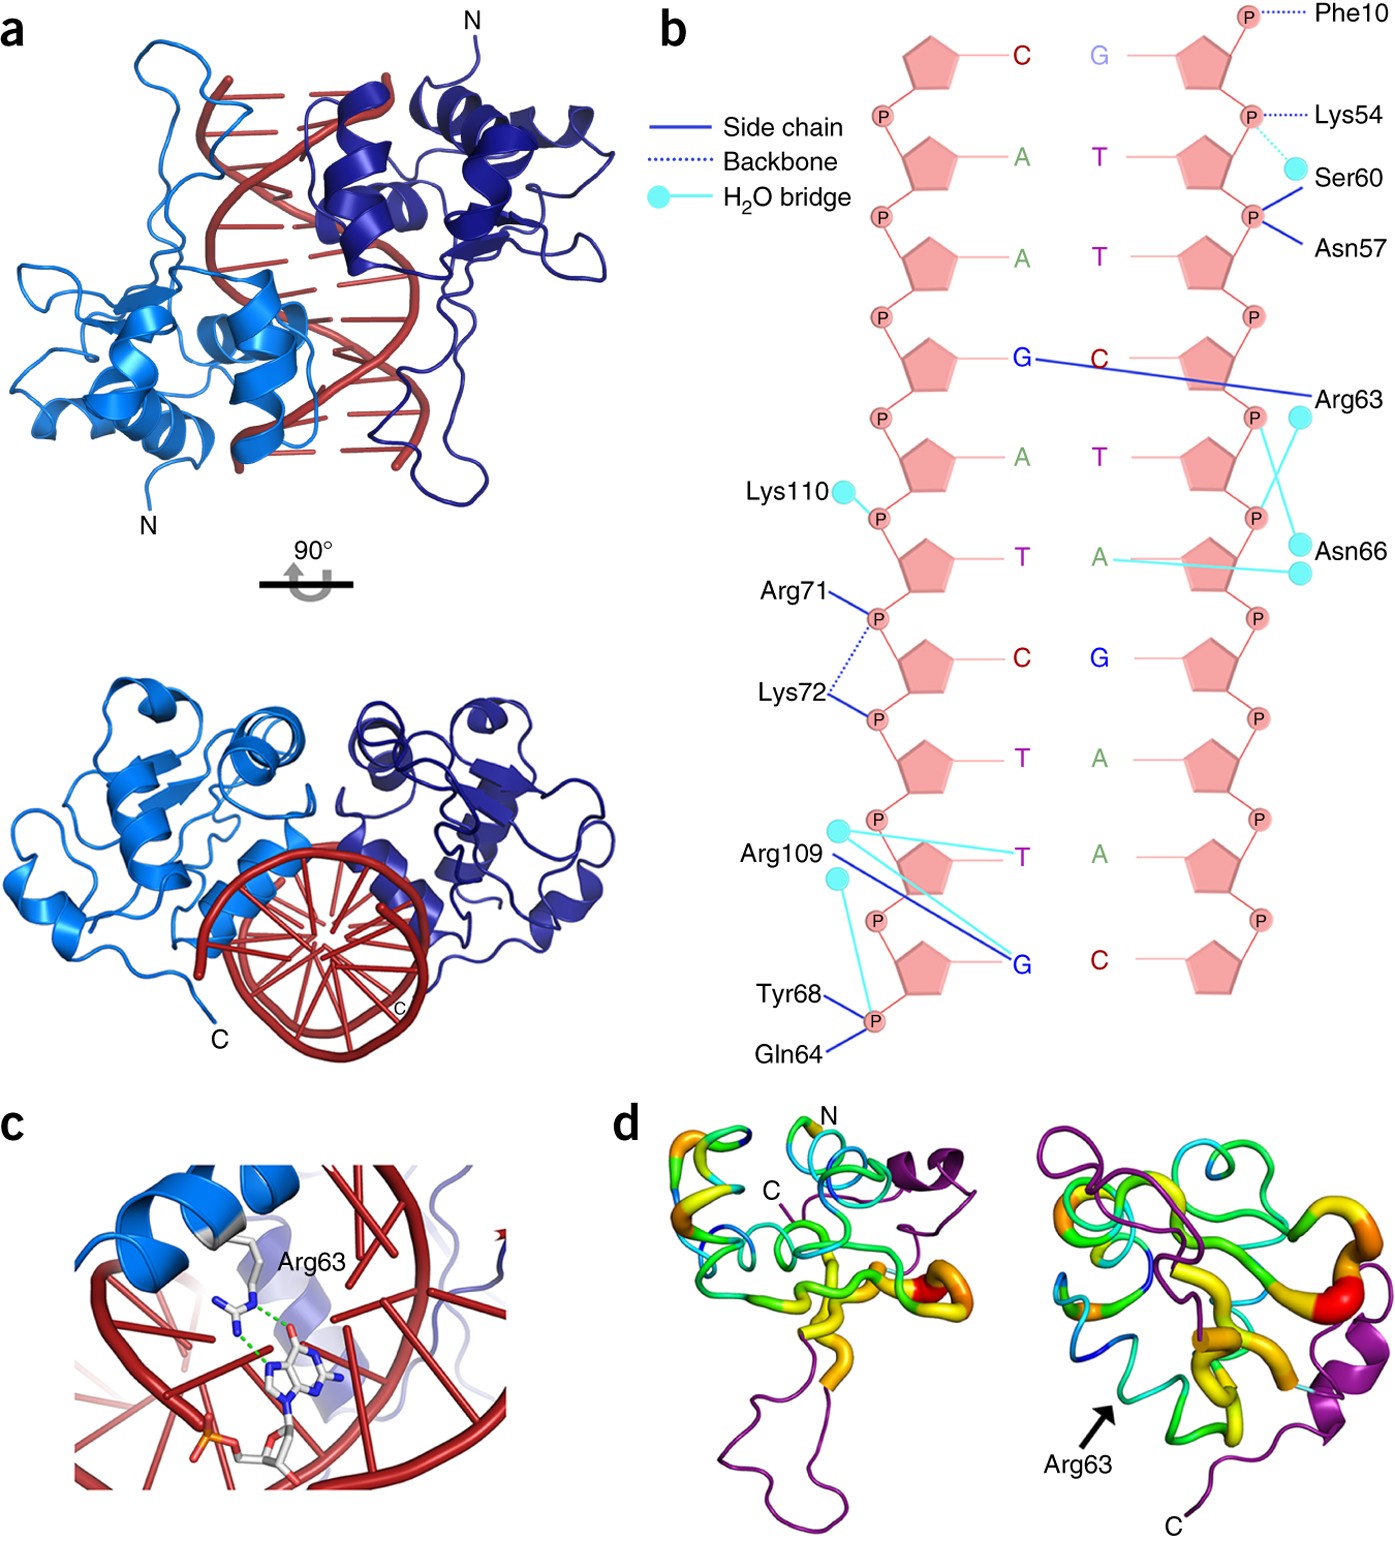 CBP-HSF2 structural and functional interplay in Rubinstein-Taybi  neurodevelopmental disorder